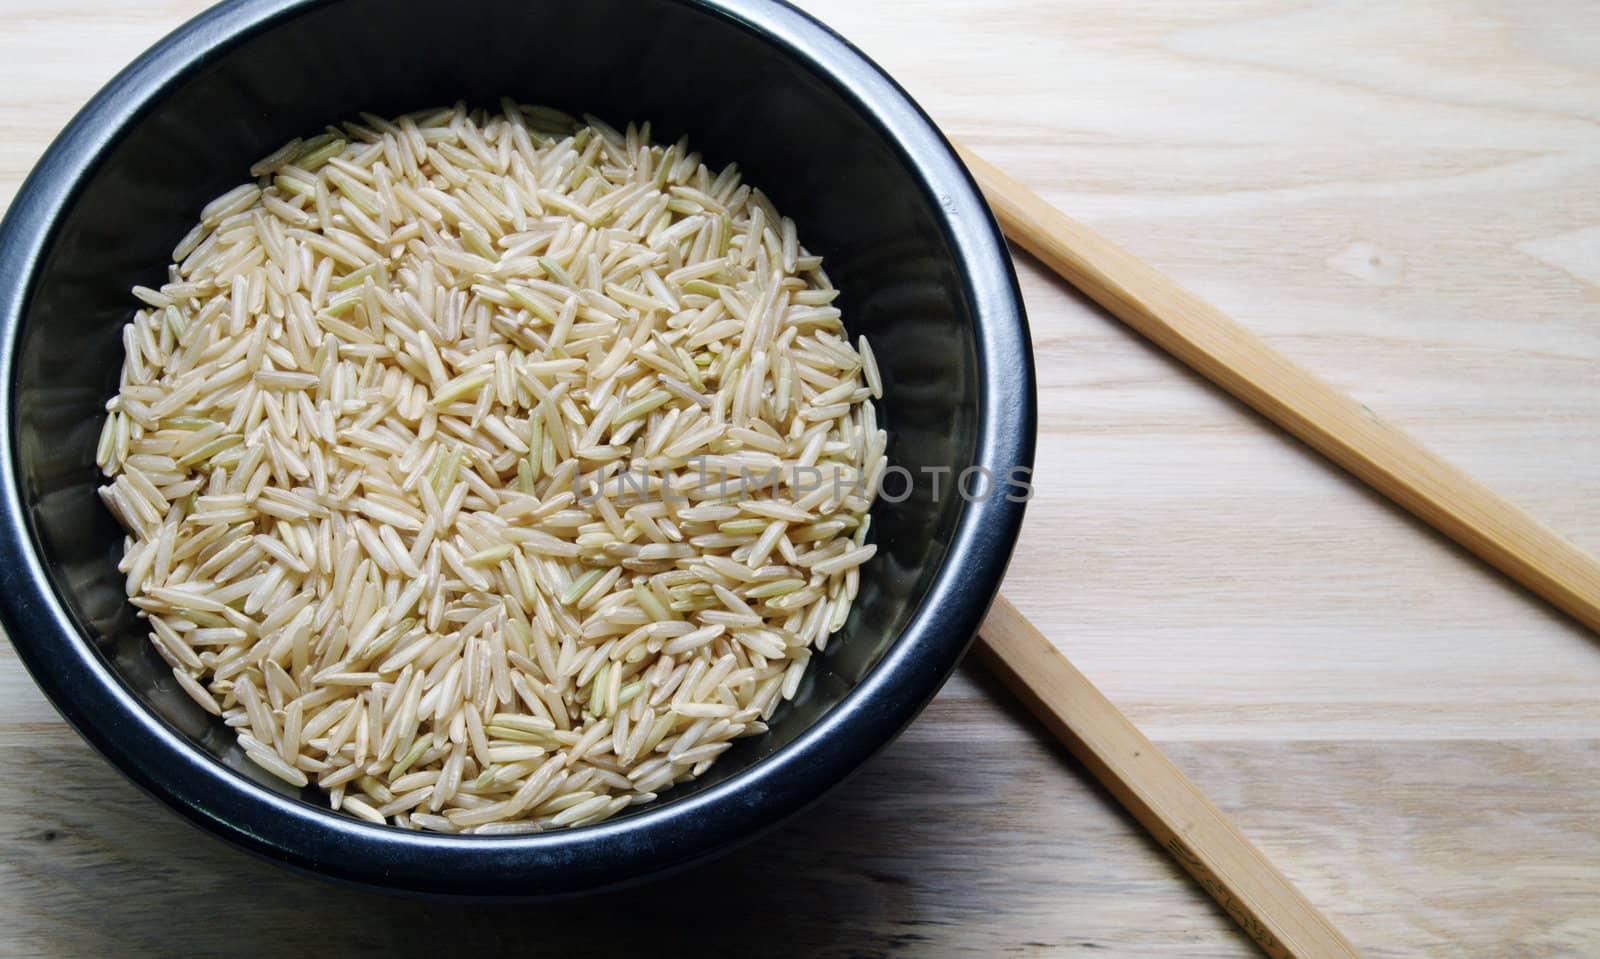 Rice in a Balck Bowl by edcorey